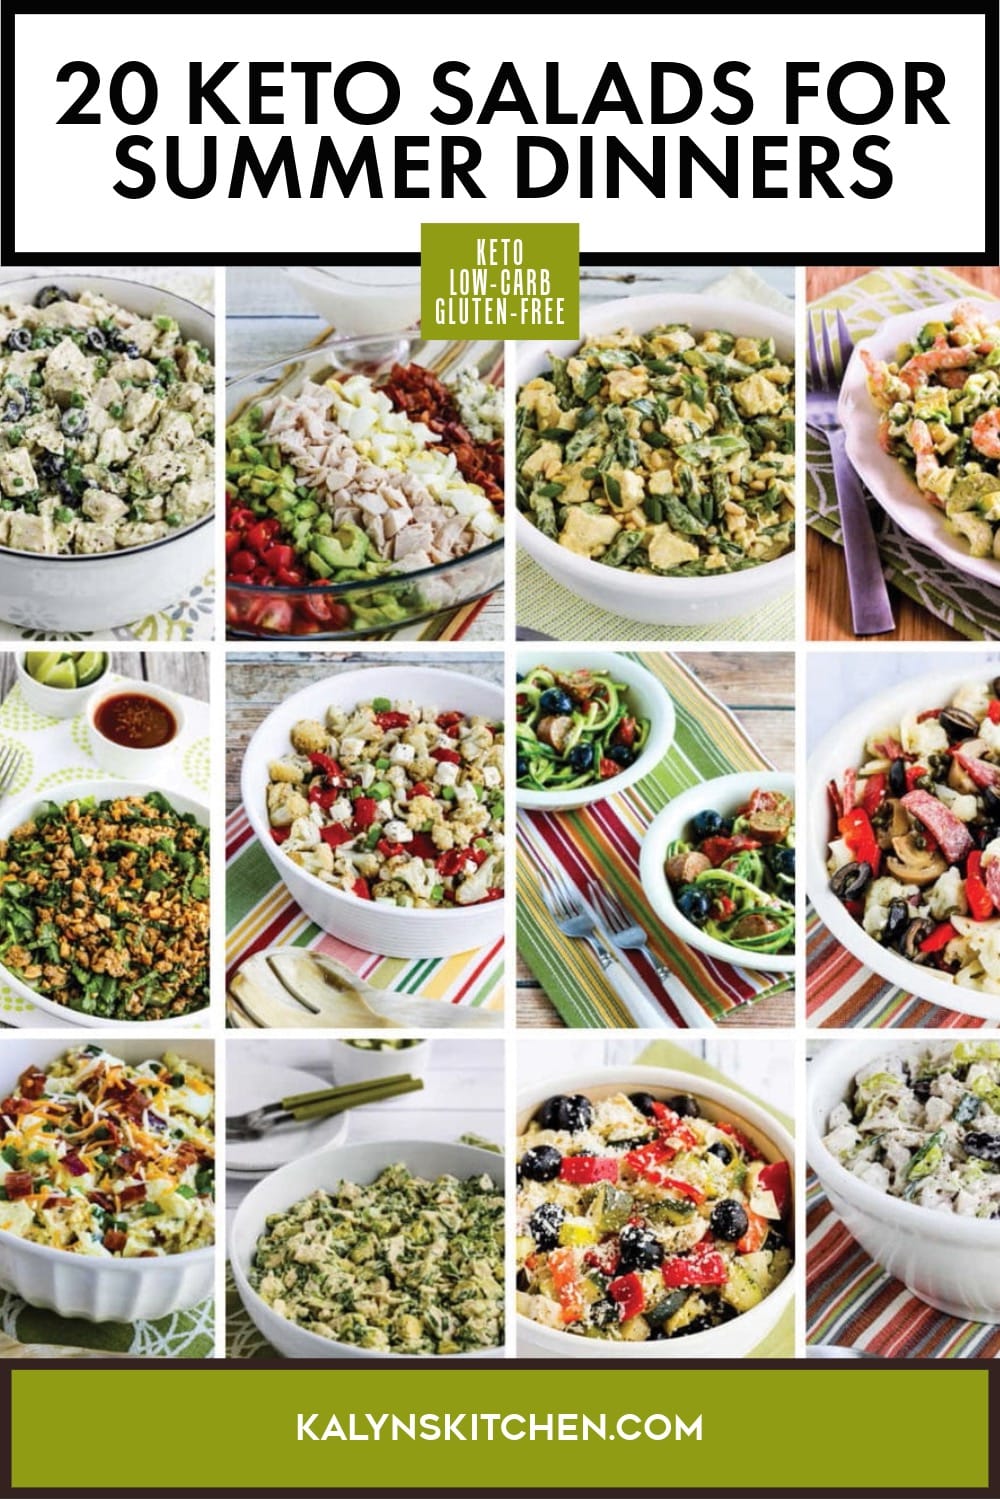 Pinterest image of 20 Keto Salads for Summer Dinners